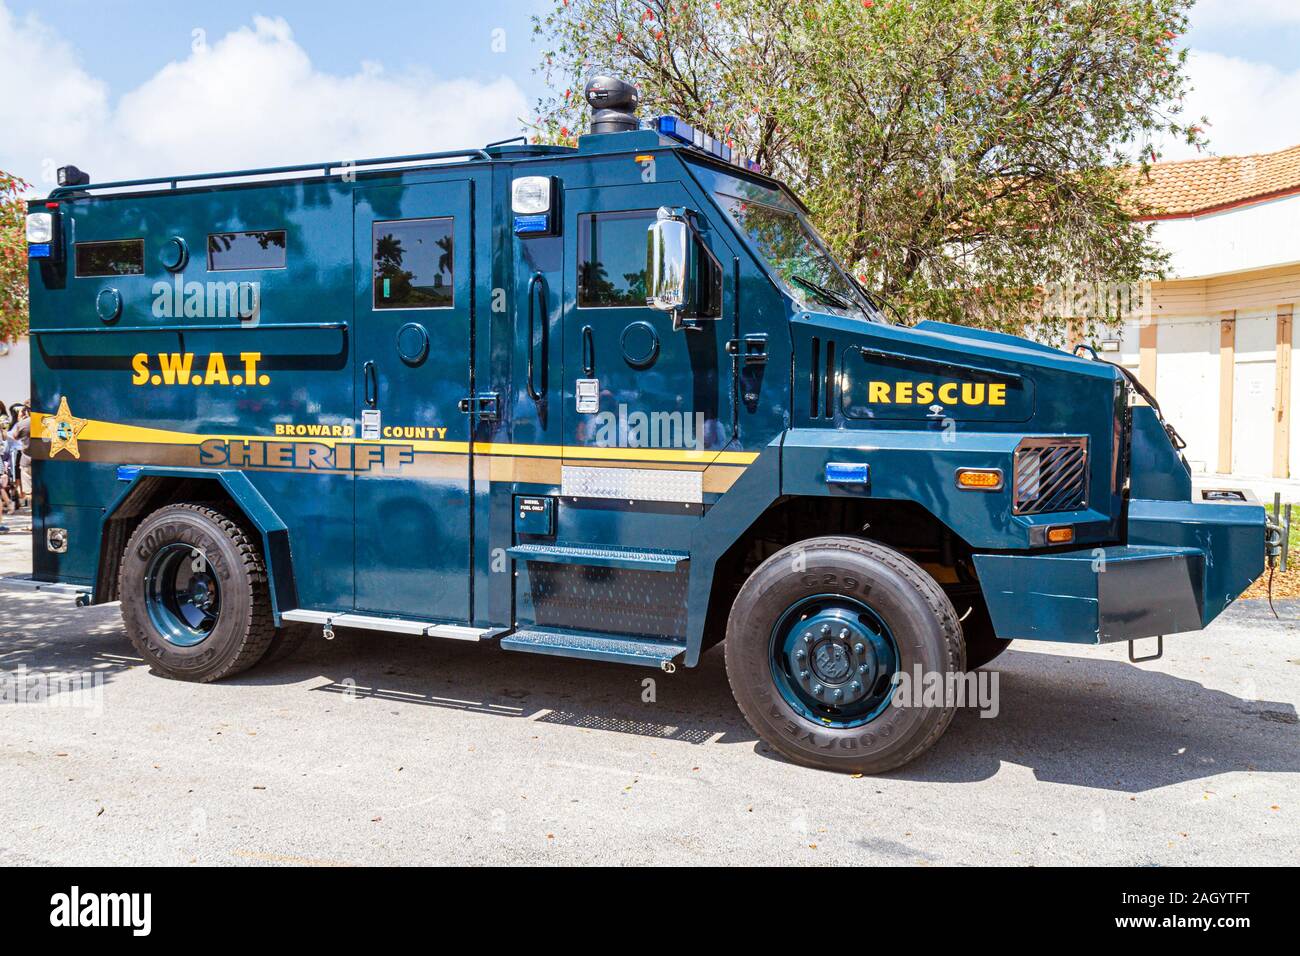 Miami Hallandale Florida,SWAT,rescue,police,truck,van,FL100502030 Stock Photo